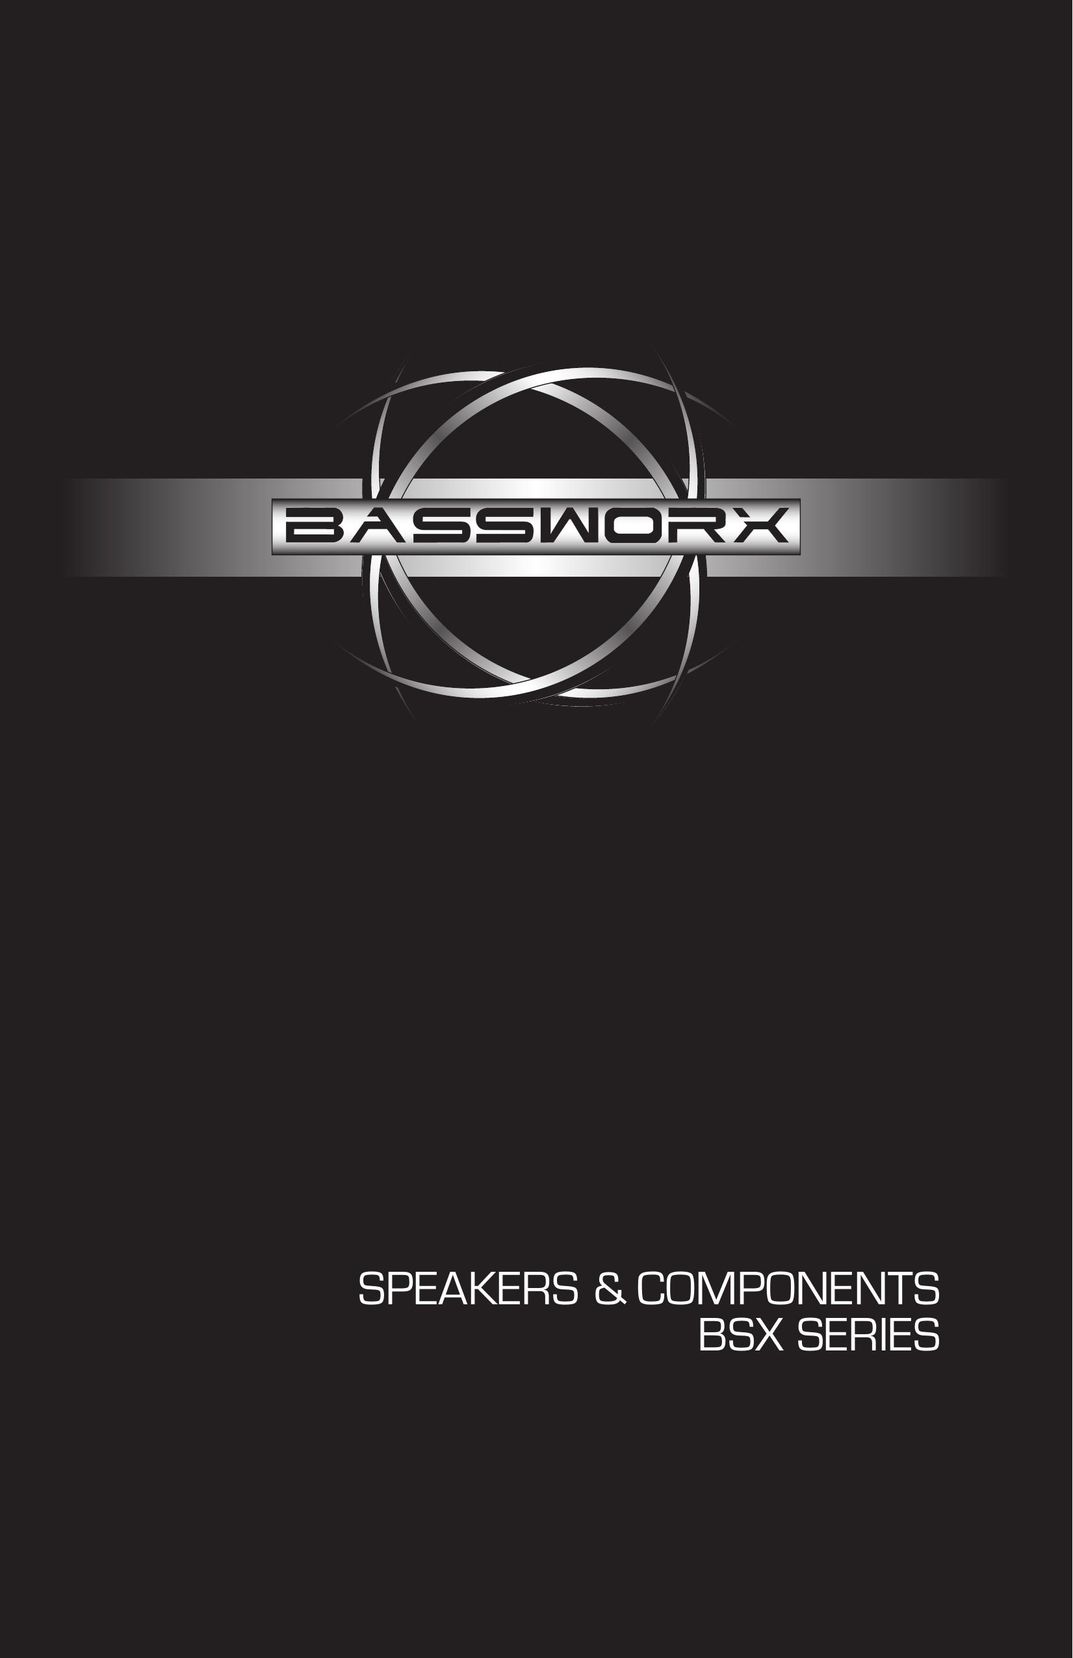 Bassworx BSX692.1 Car Speaker User Manual